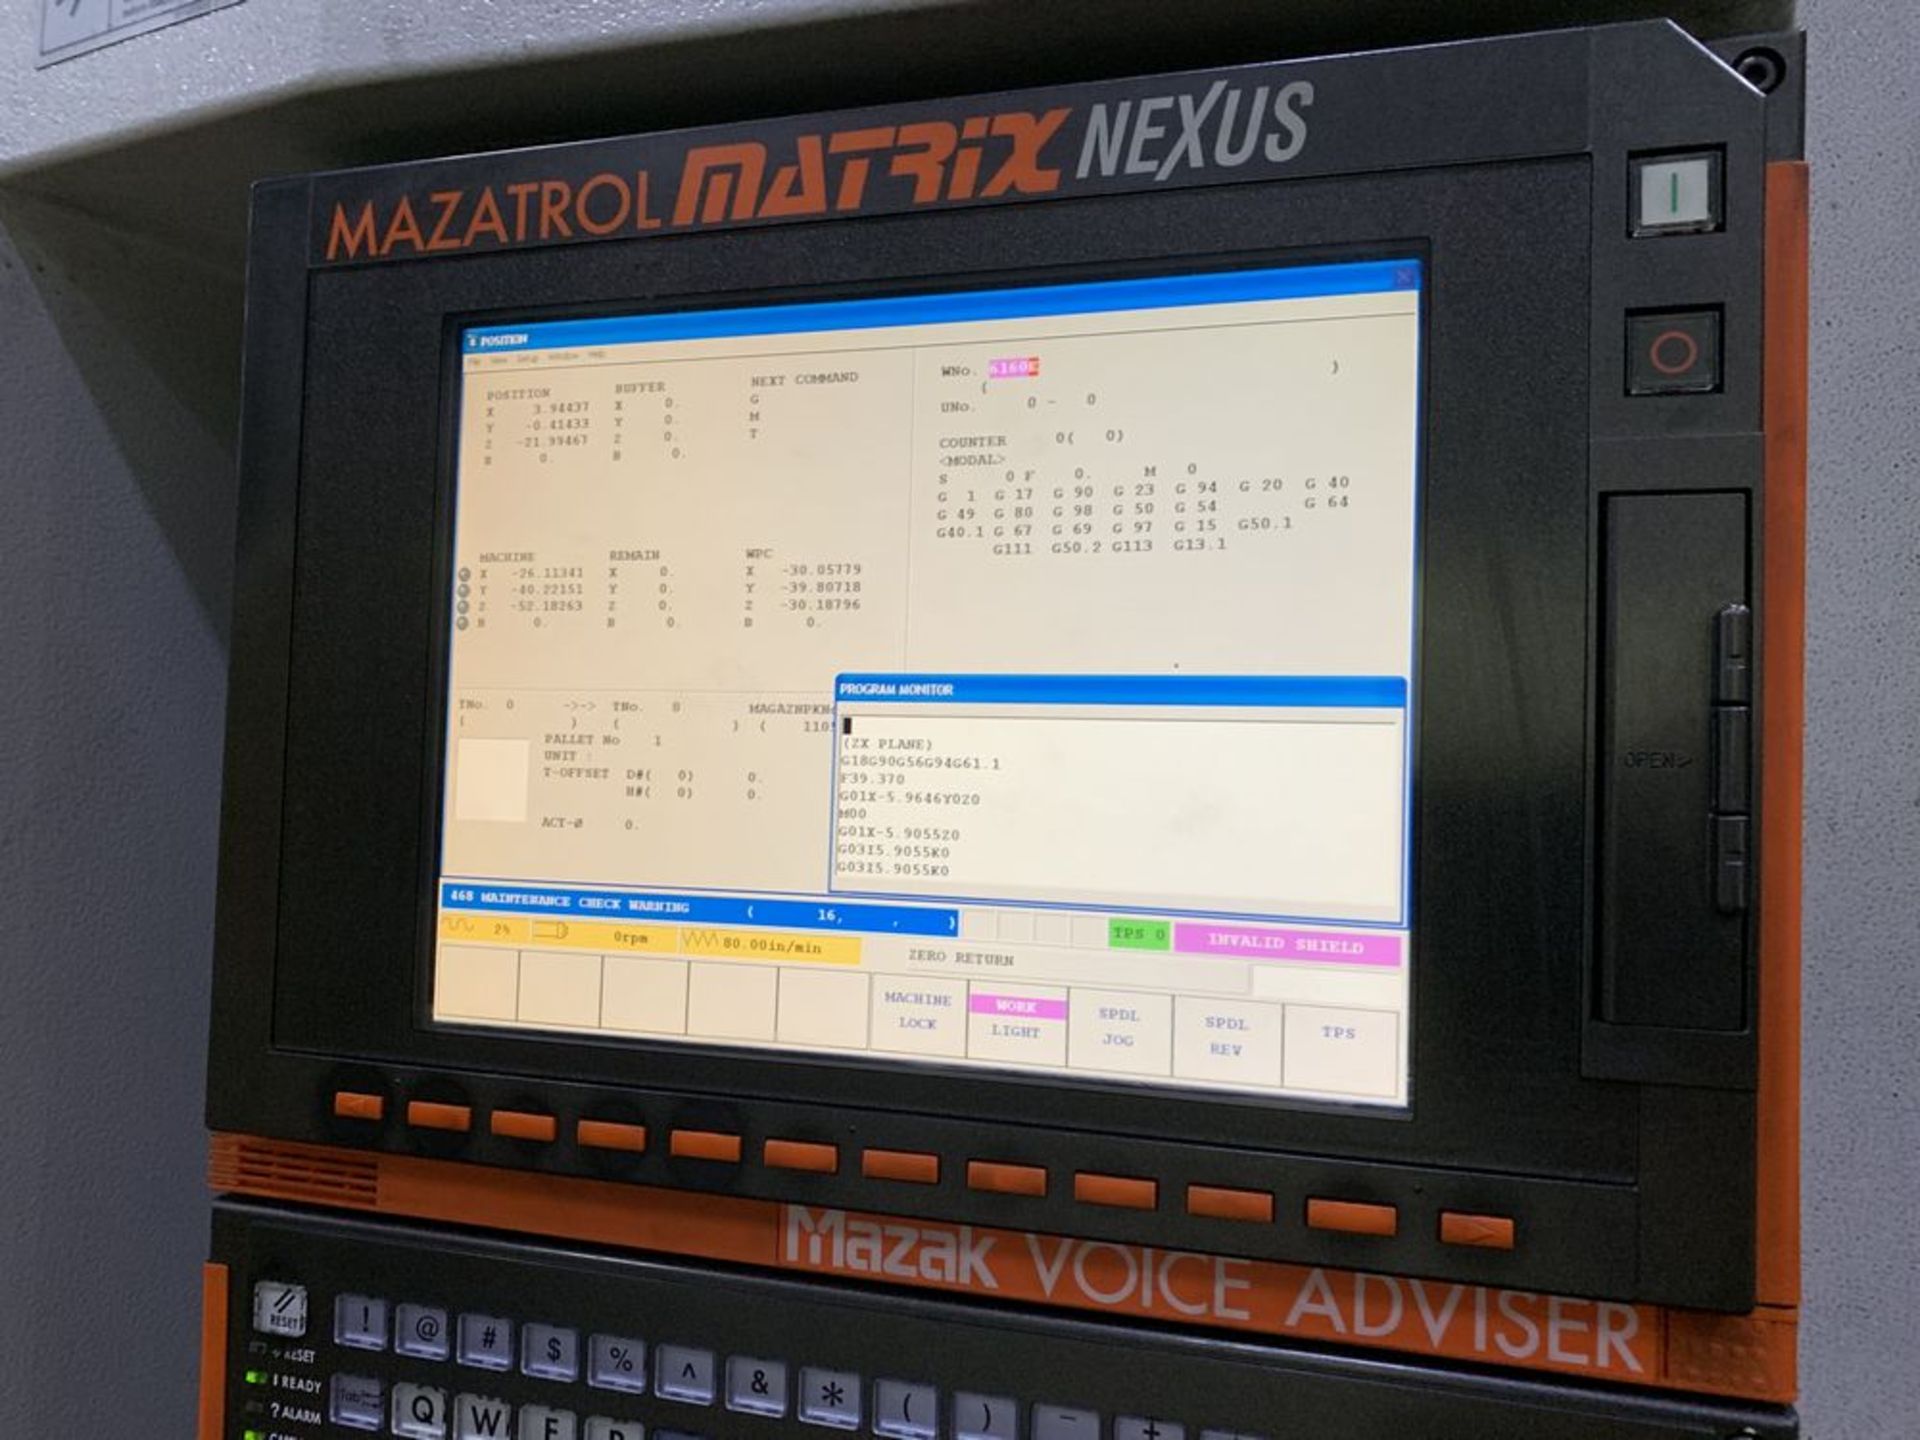 2010 MAZAK 8800 CNC Horizontal Machining Center, s/n 218382, Mazatrol Matrix Nexus CNC Control - Image 11 of 17